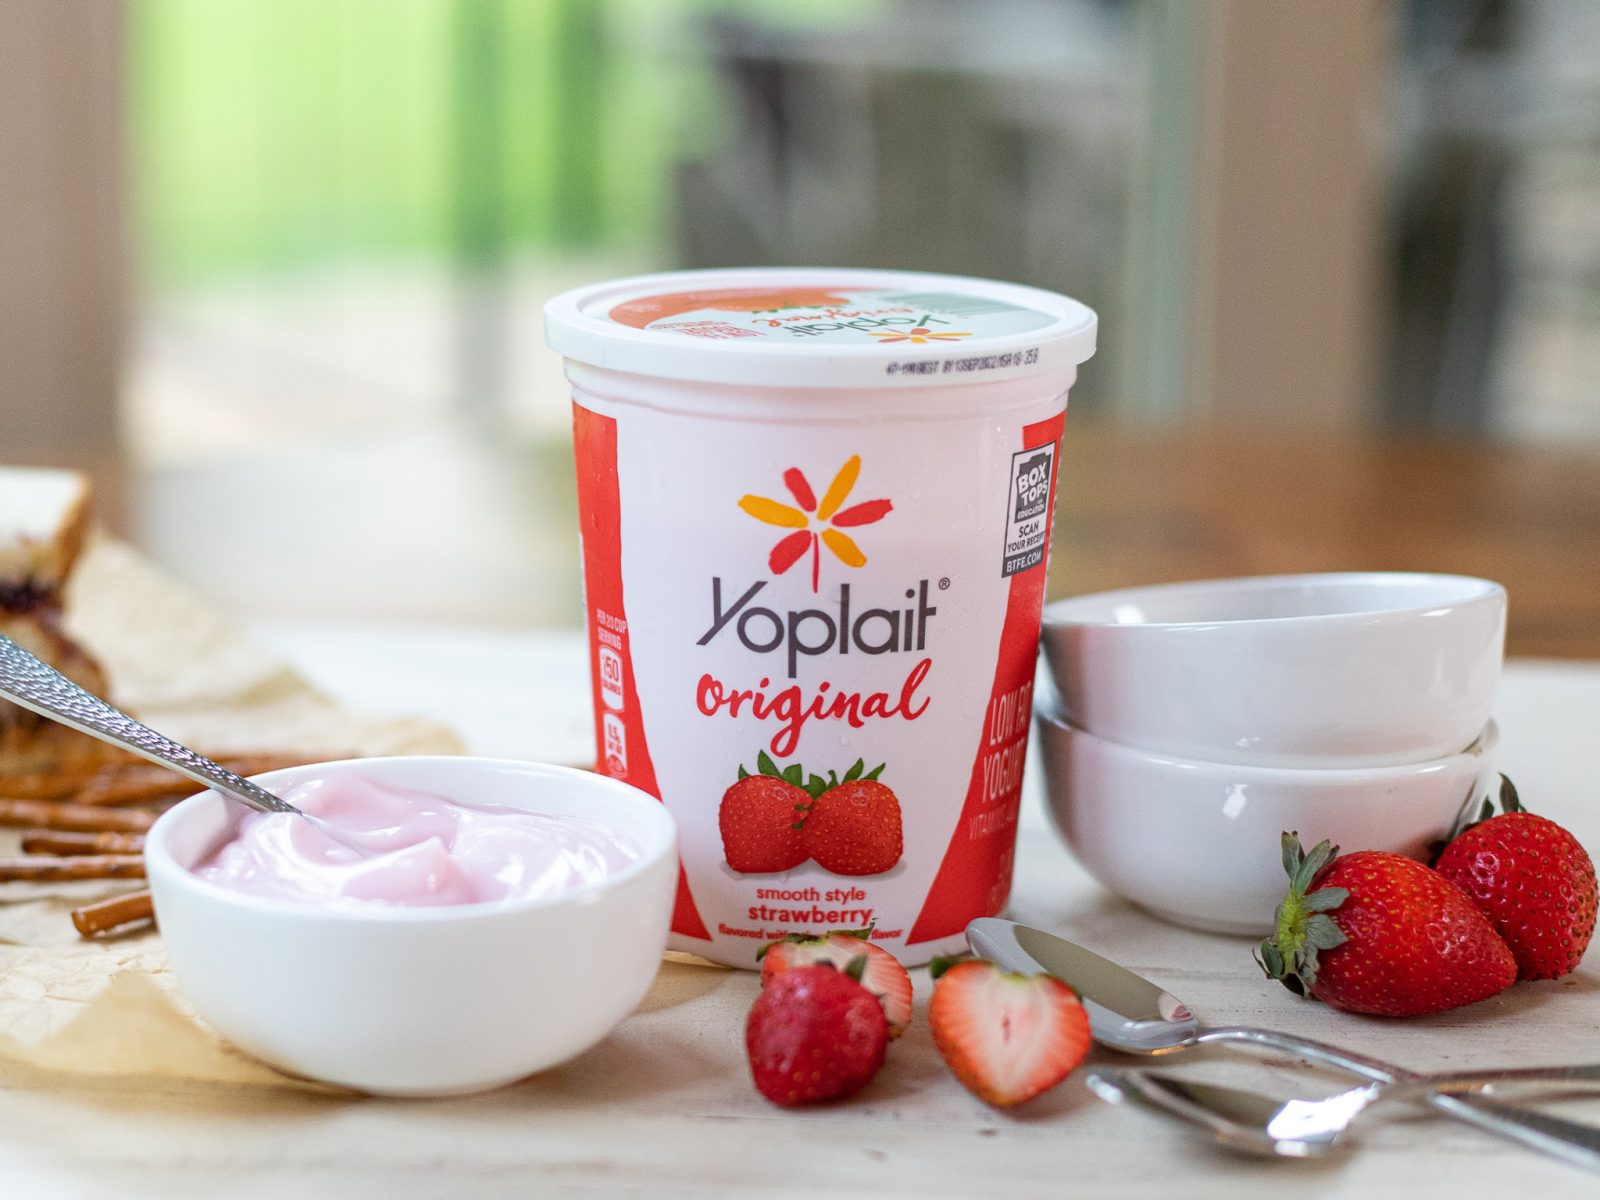 Fantastic Deal On Big Tubs Of Yoplait Yogurt At Publix – Just $1